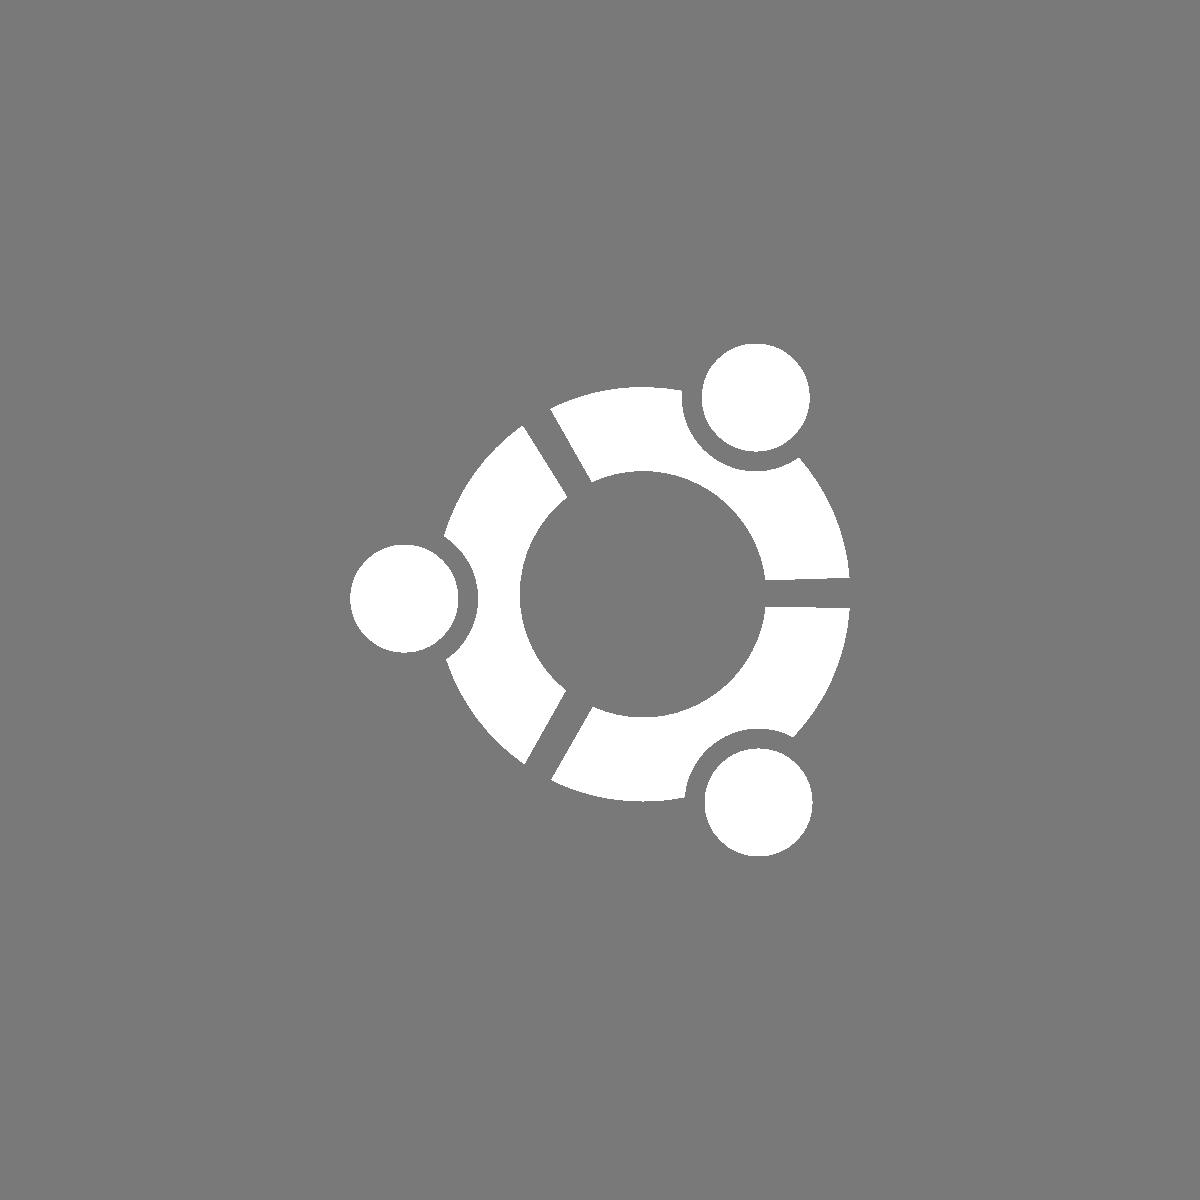 ubuntu 16.04 reached eol in april 2021, 18.04 to follow in 2023